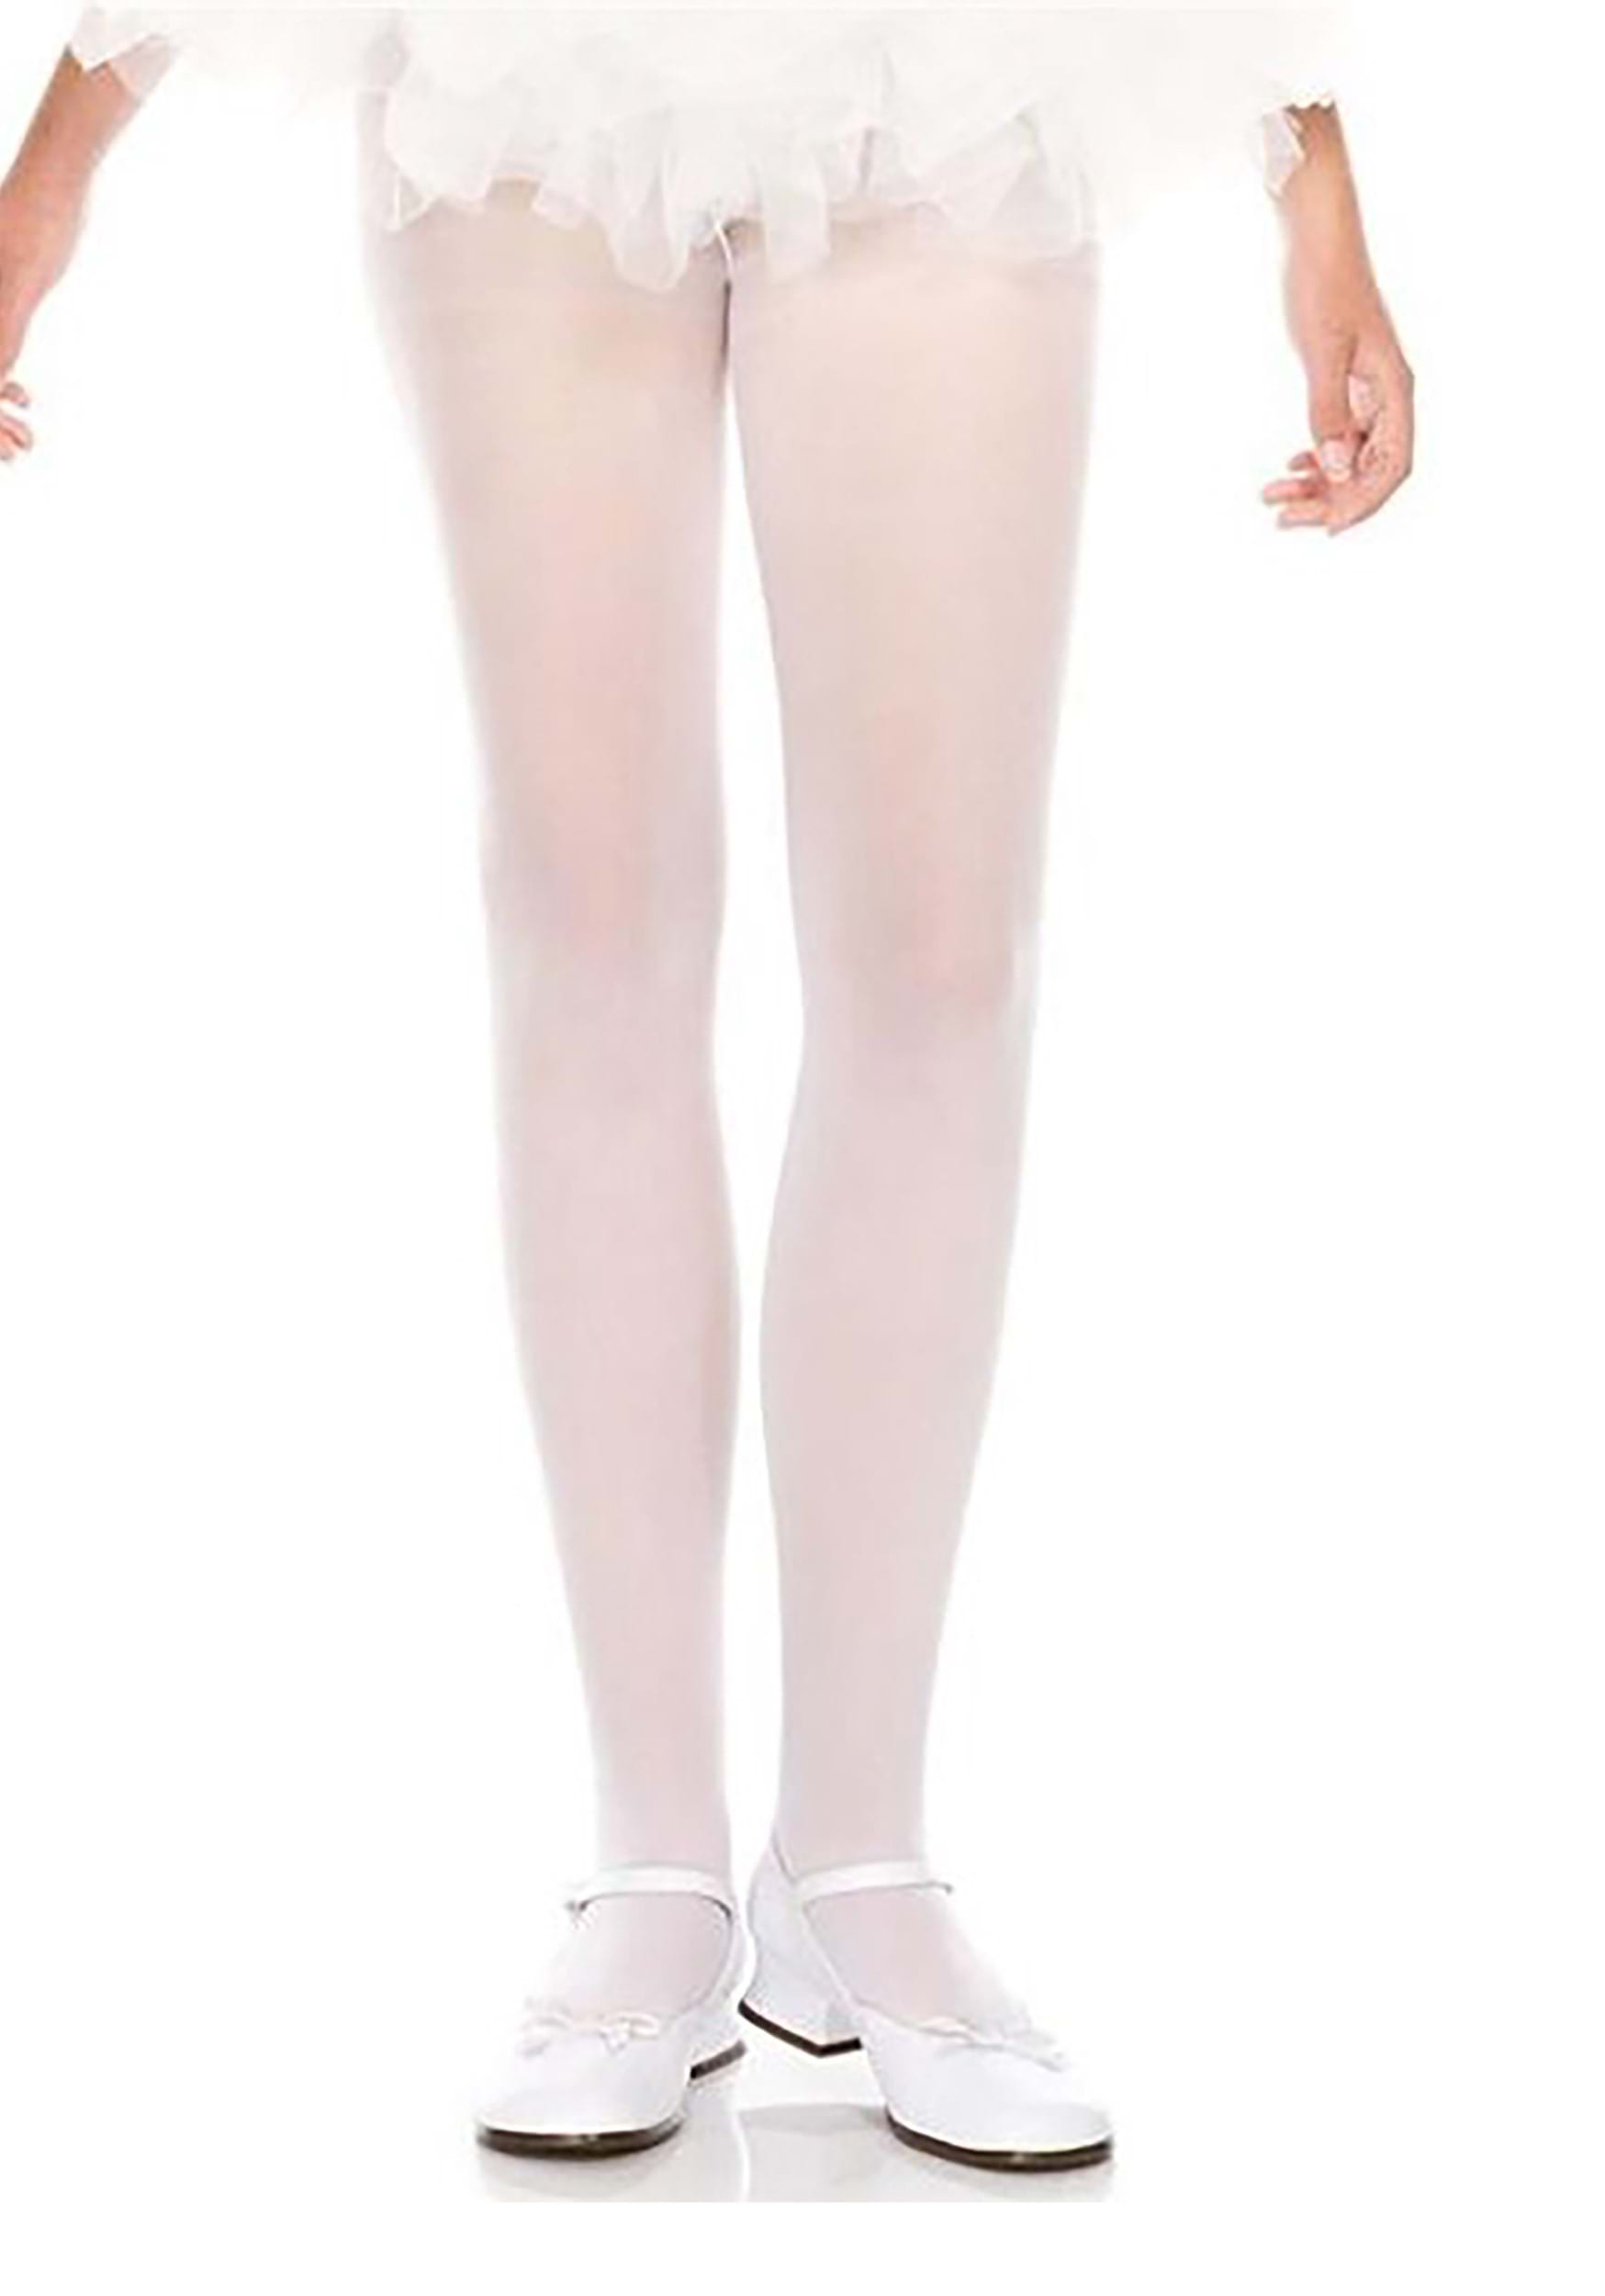 Child Girls White Opaque Tights Pantyhose Hosiery - Abracadabra Fancy Dress